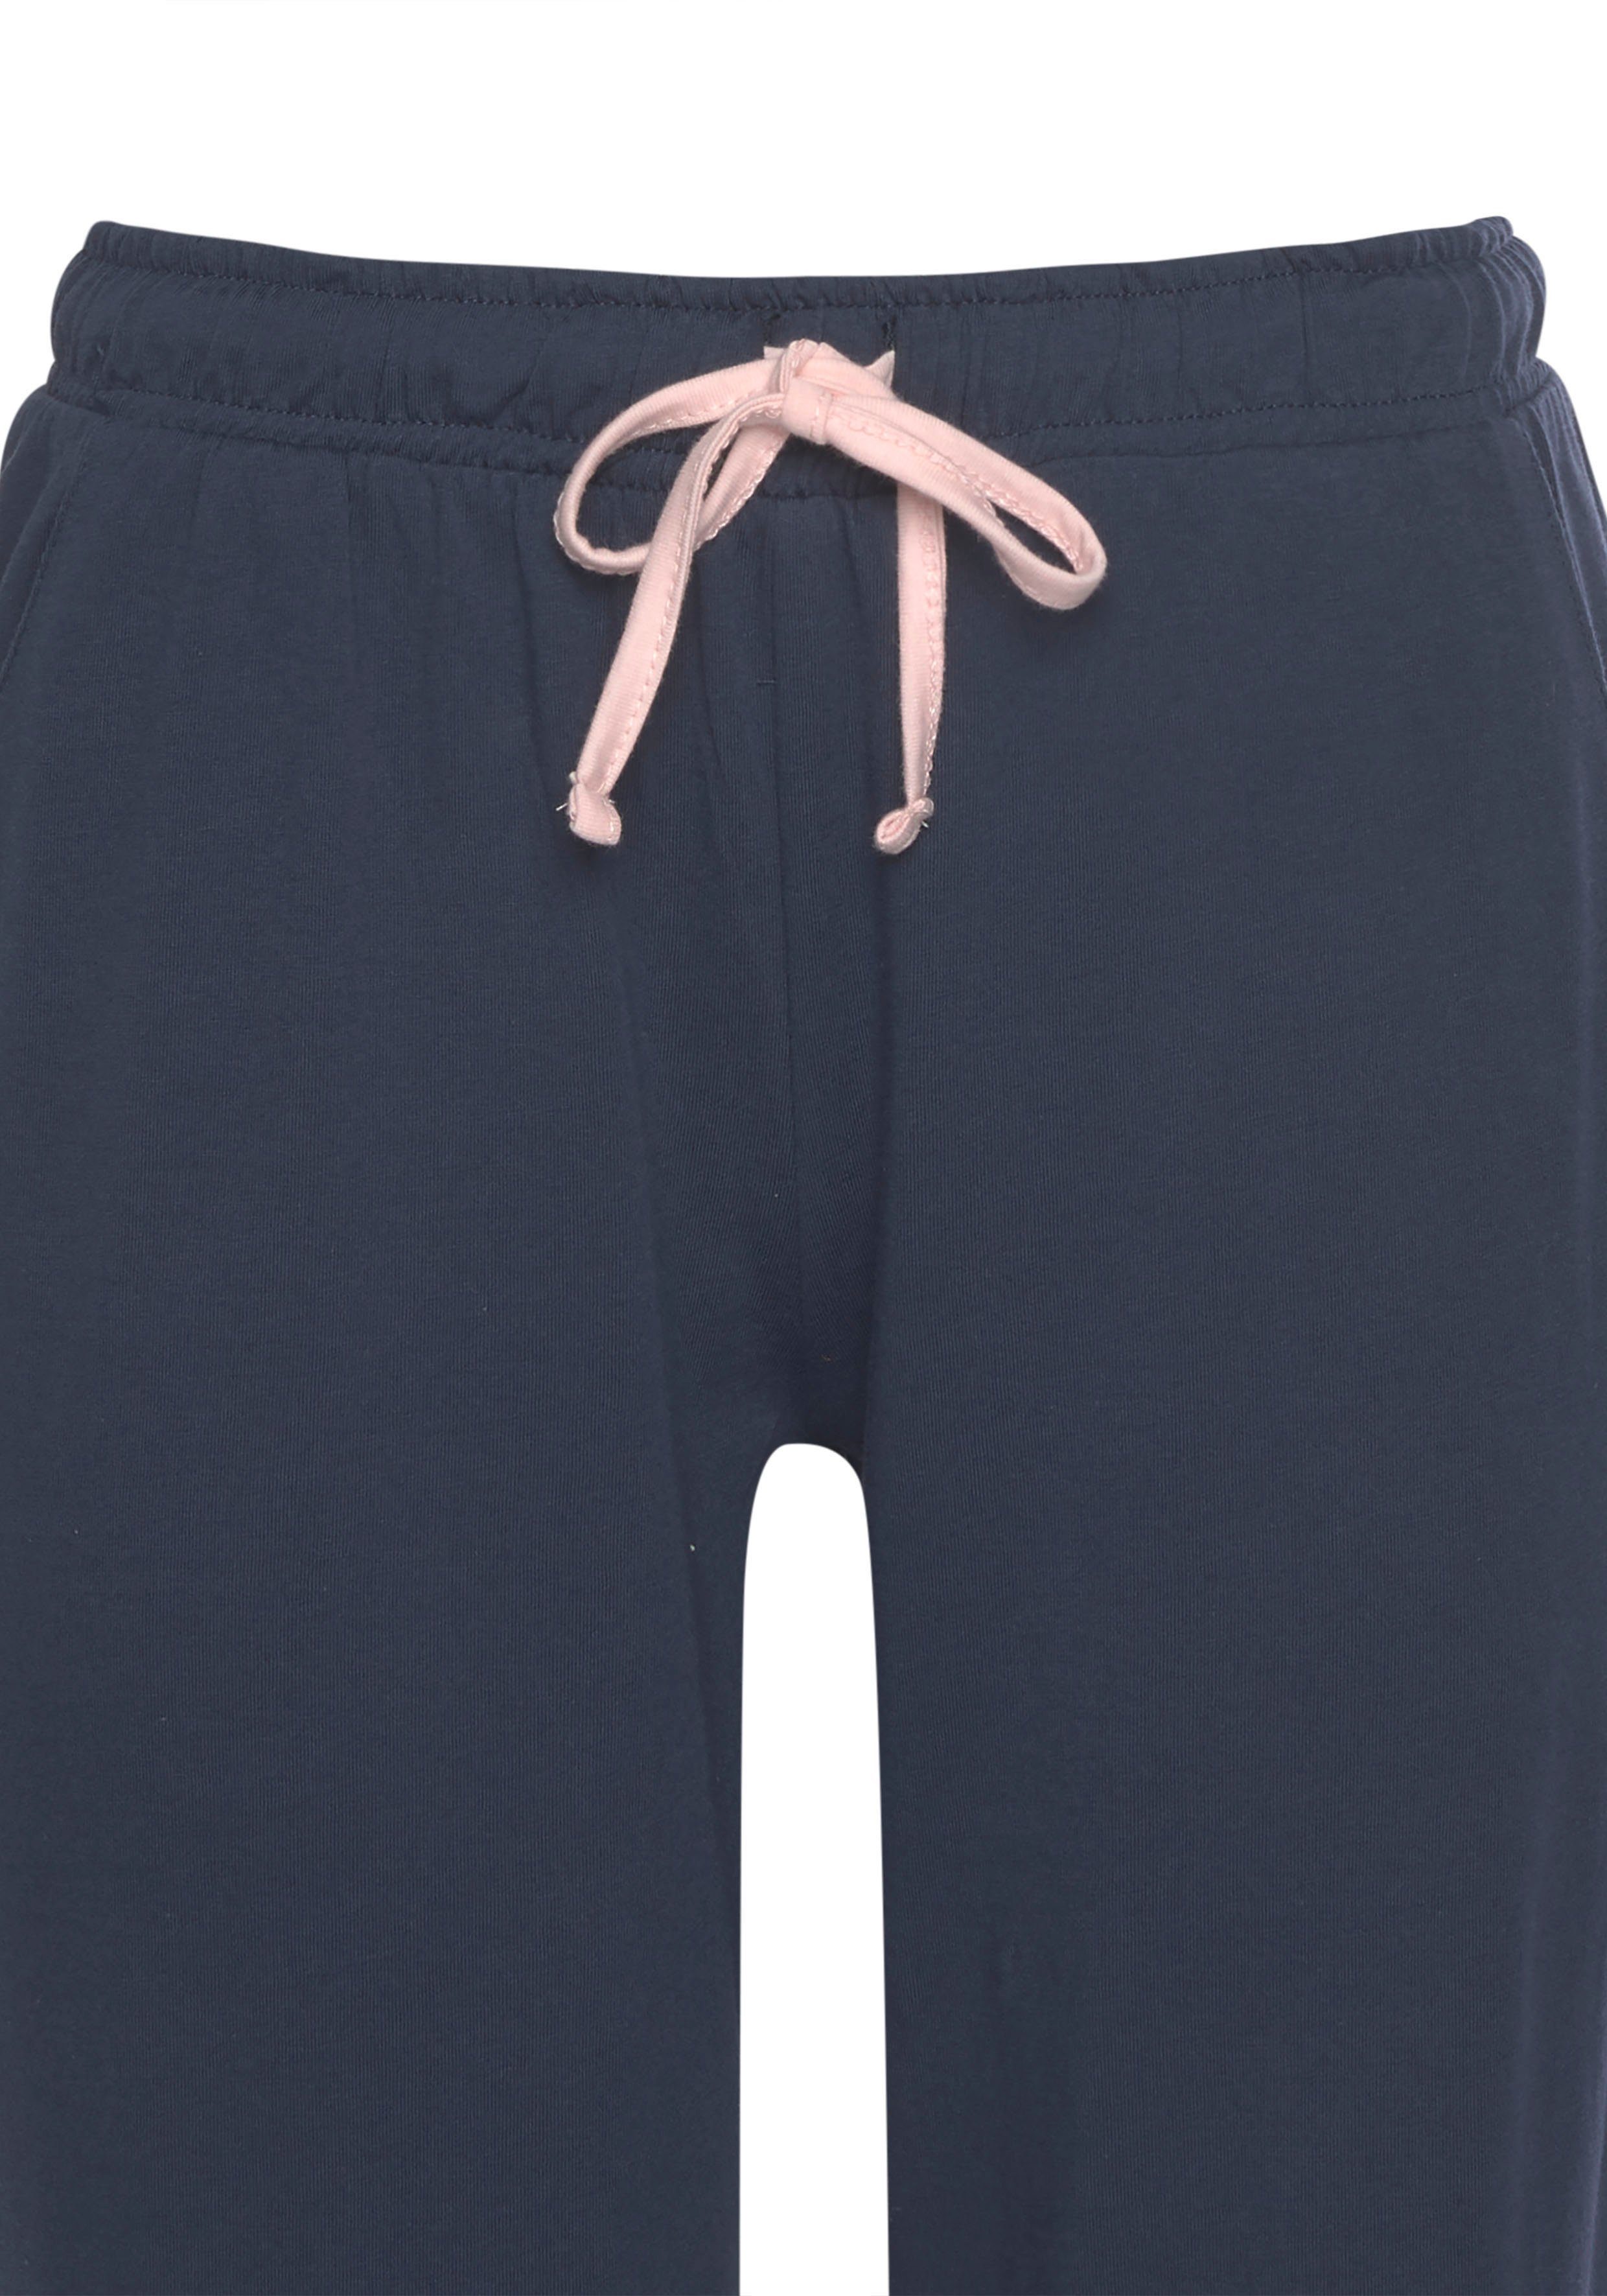 mit (2 kontrastfarbenen 1 tlg., KangaROOS Raglanärmeln Stück) rosa-dunkelblau Pyjama